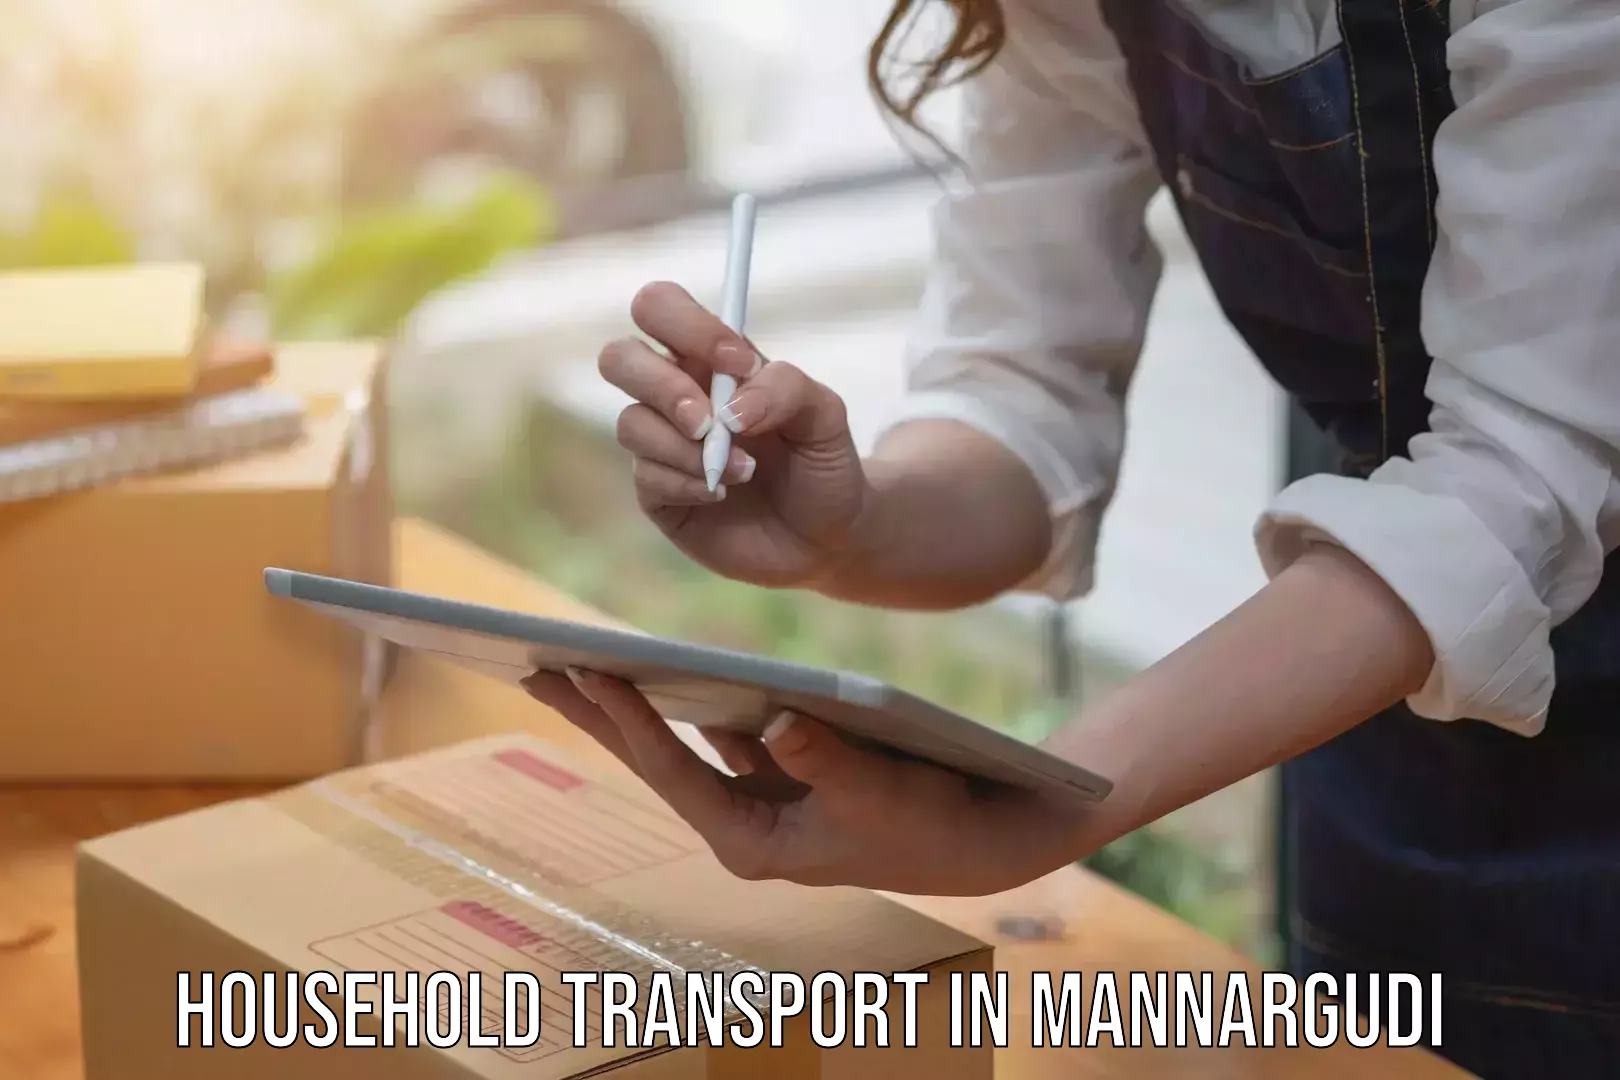 Professional moving assistance in Mannargudi